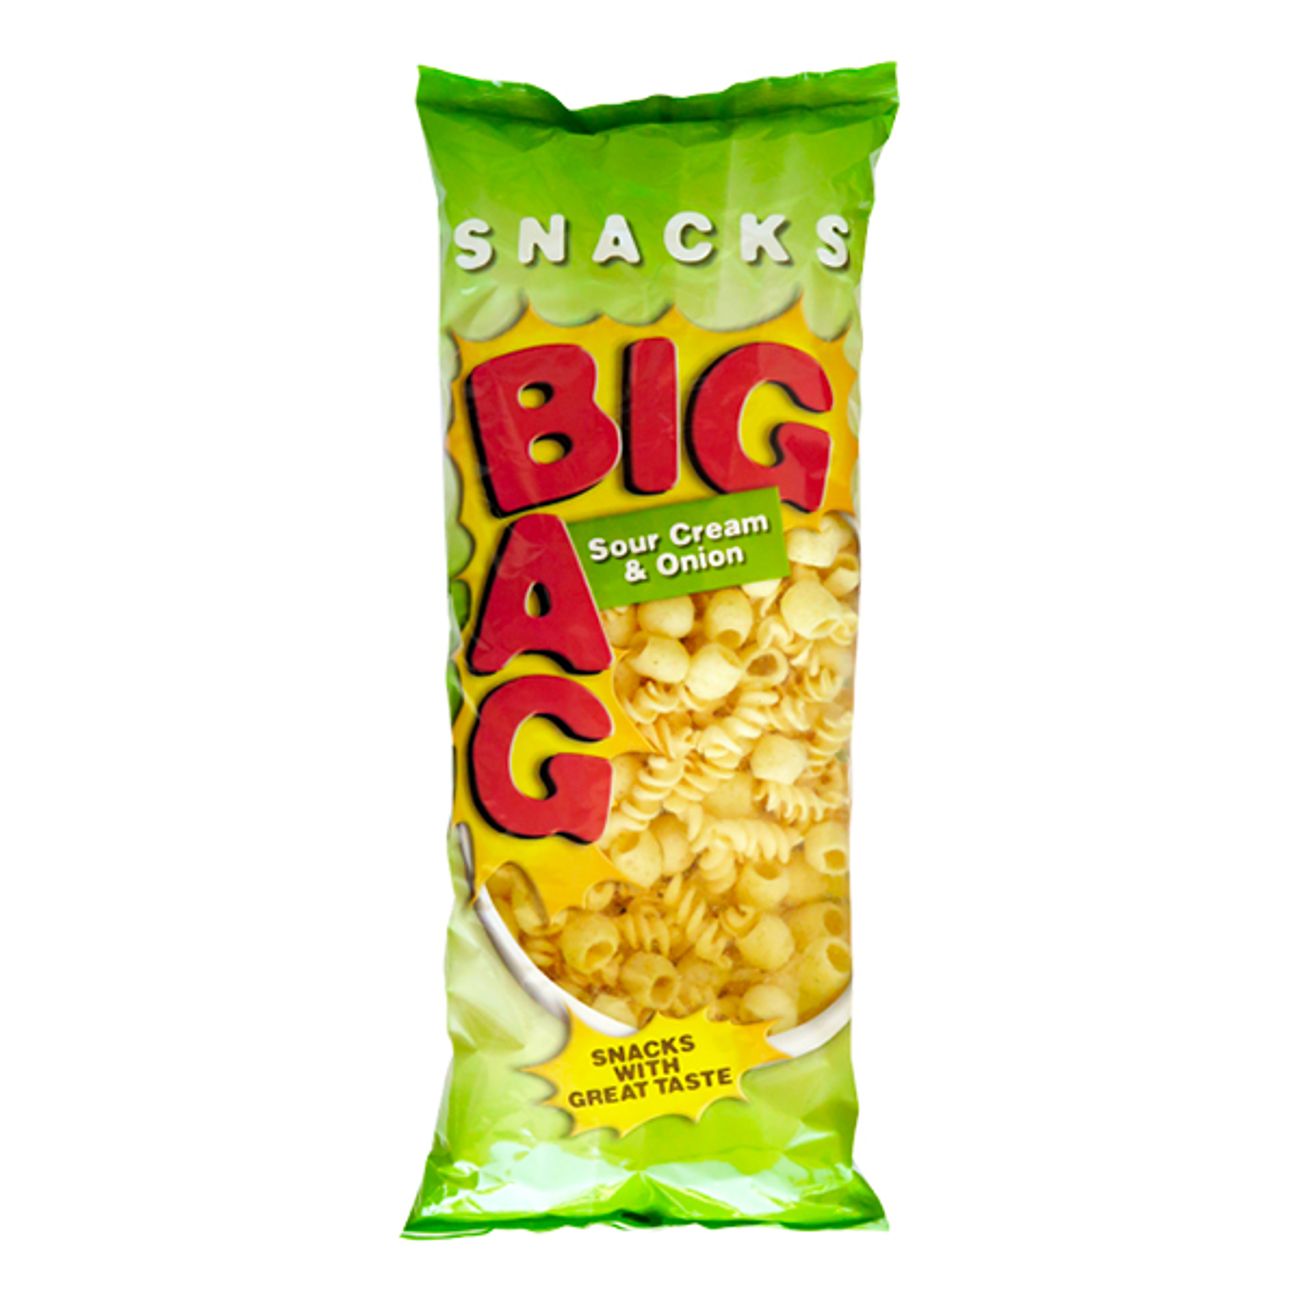 big-bag-sourcream-onion-snacks-79854-1